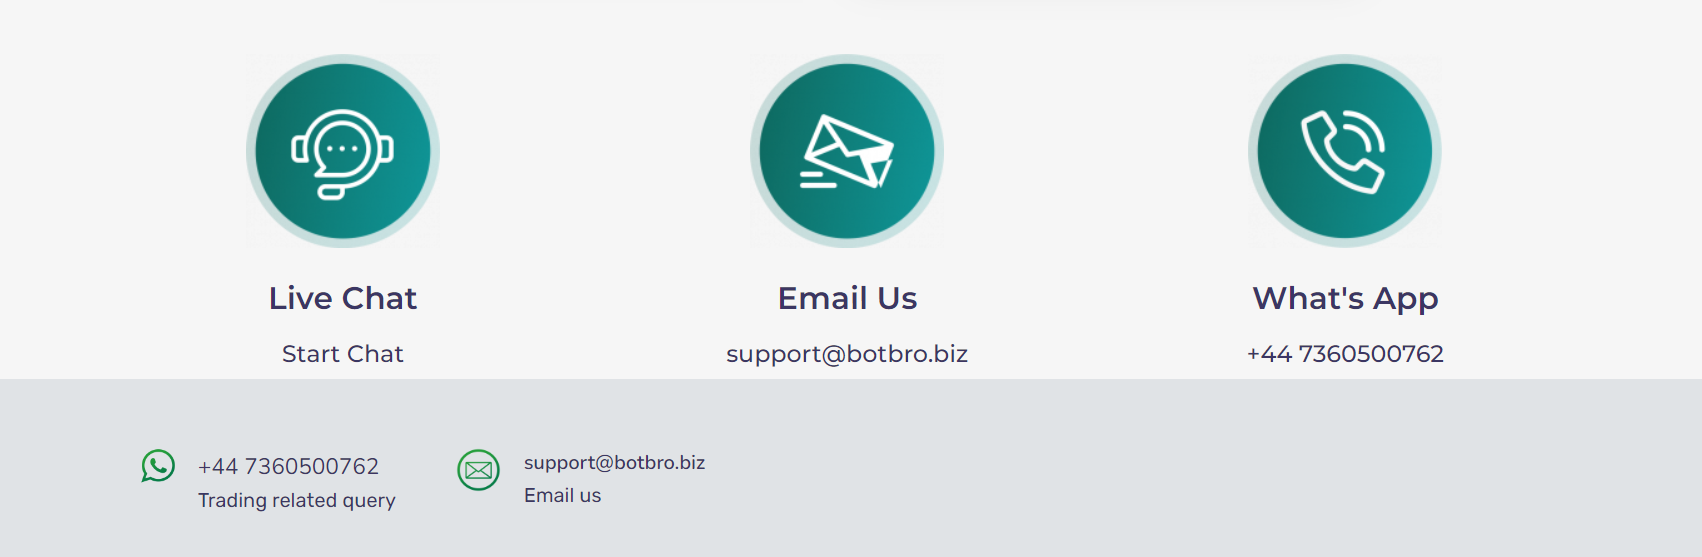 Customer Support of botbro